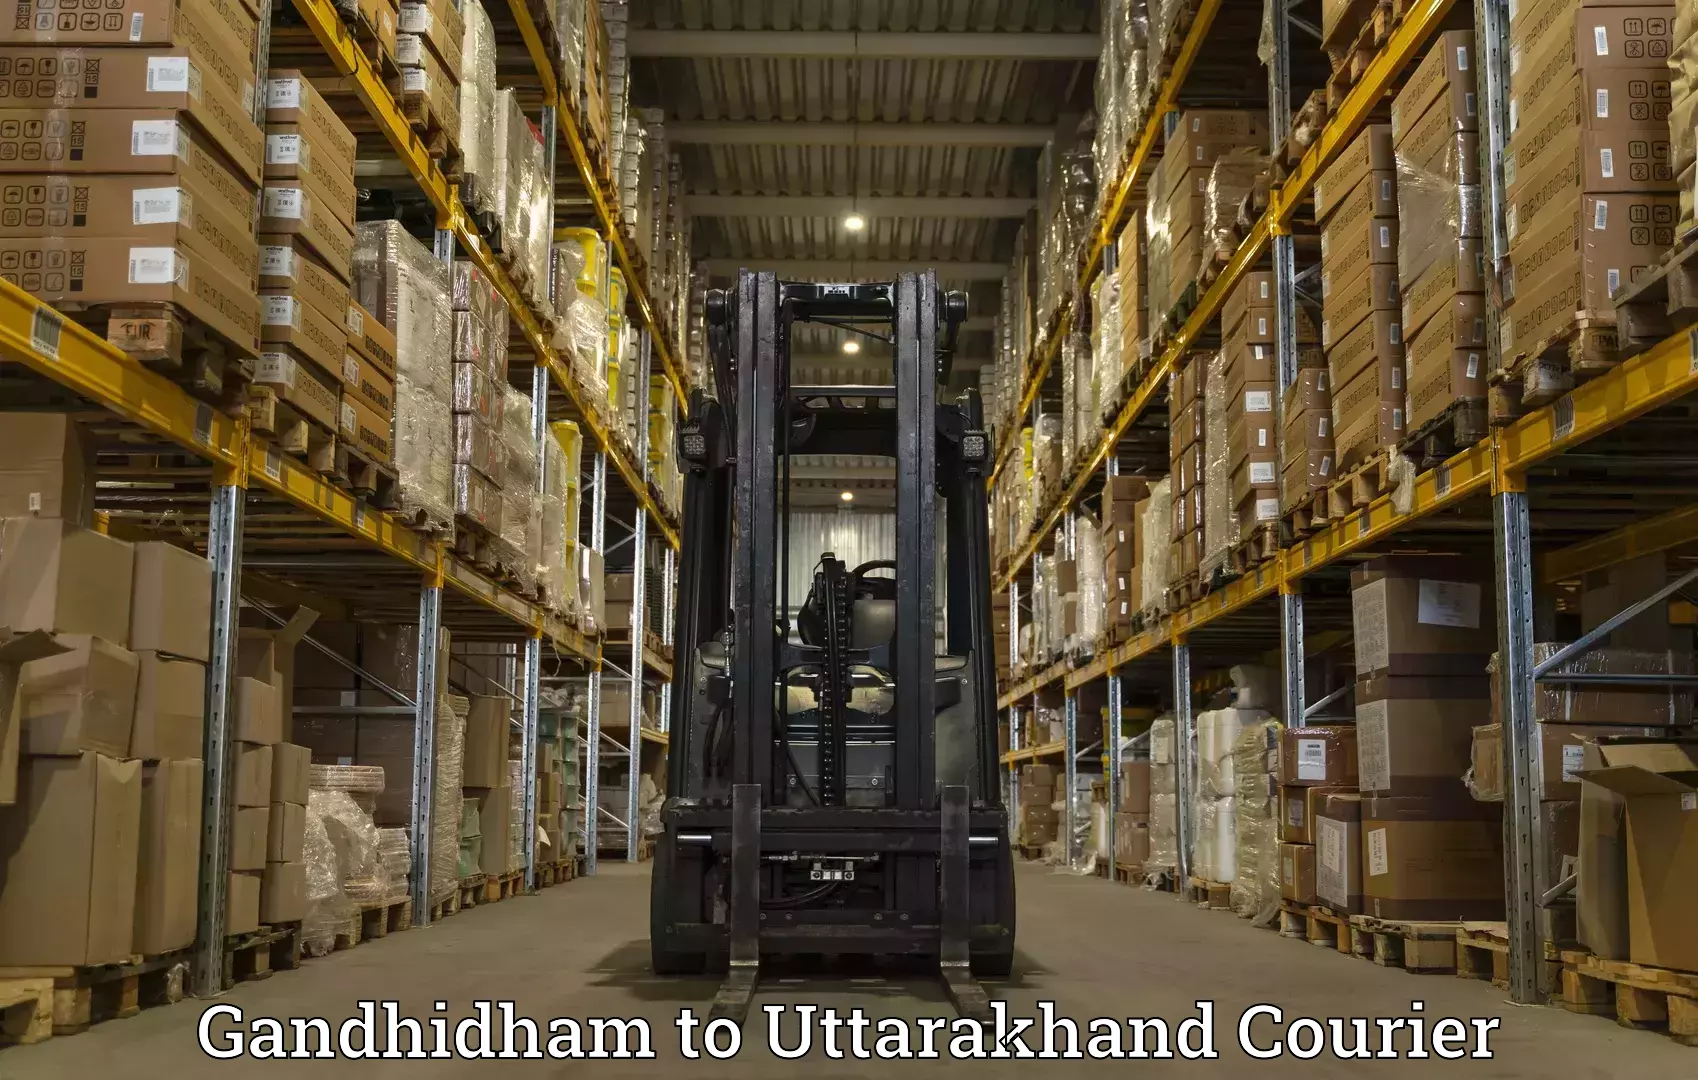 Modern delivery technologies Gandhidham to Uttarakhand